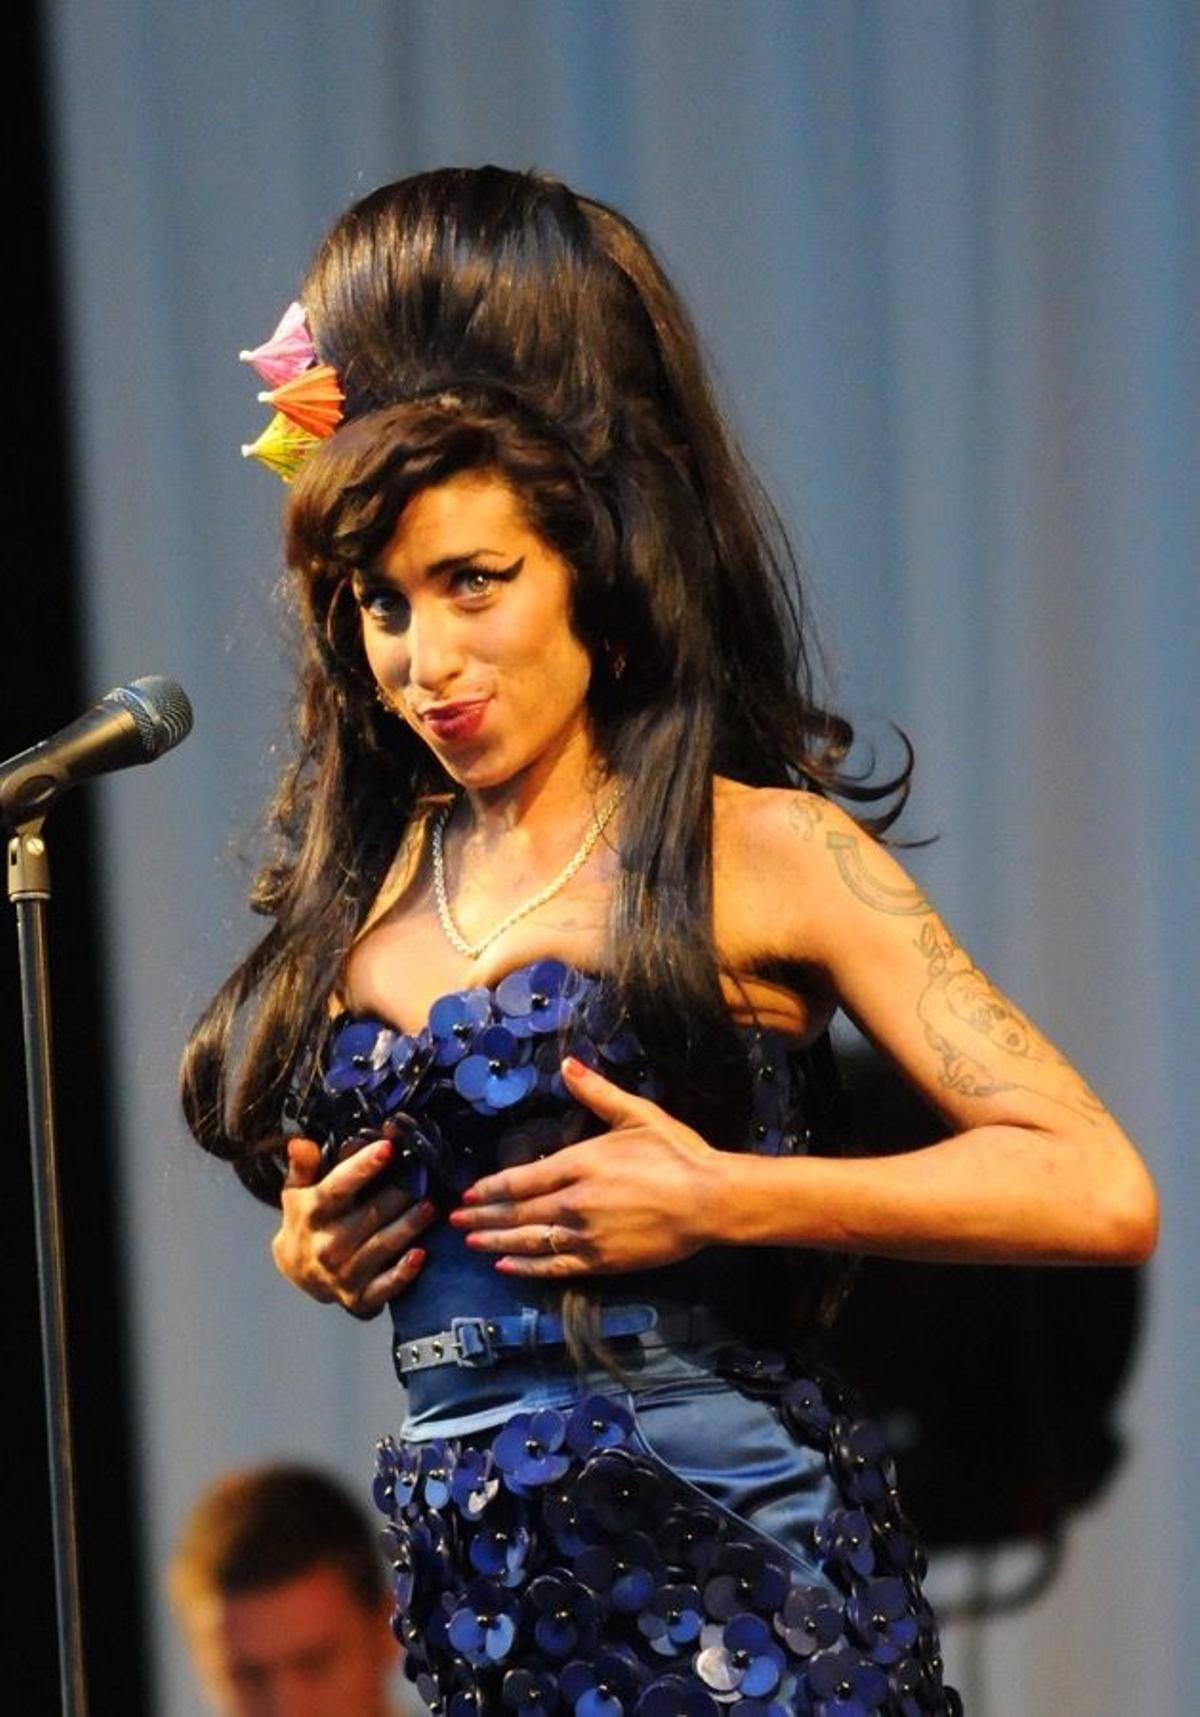 Amy Winehouse, siempre provocativa